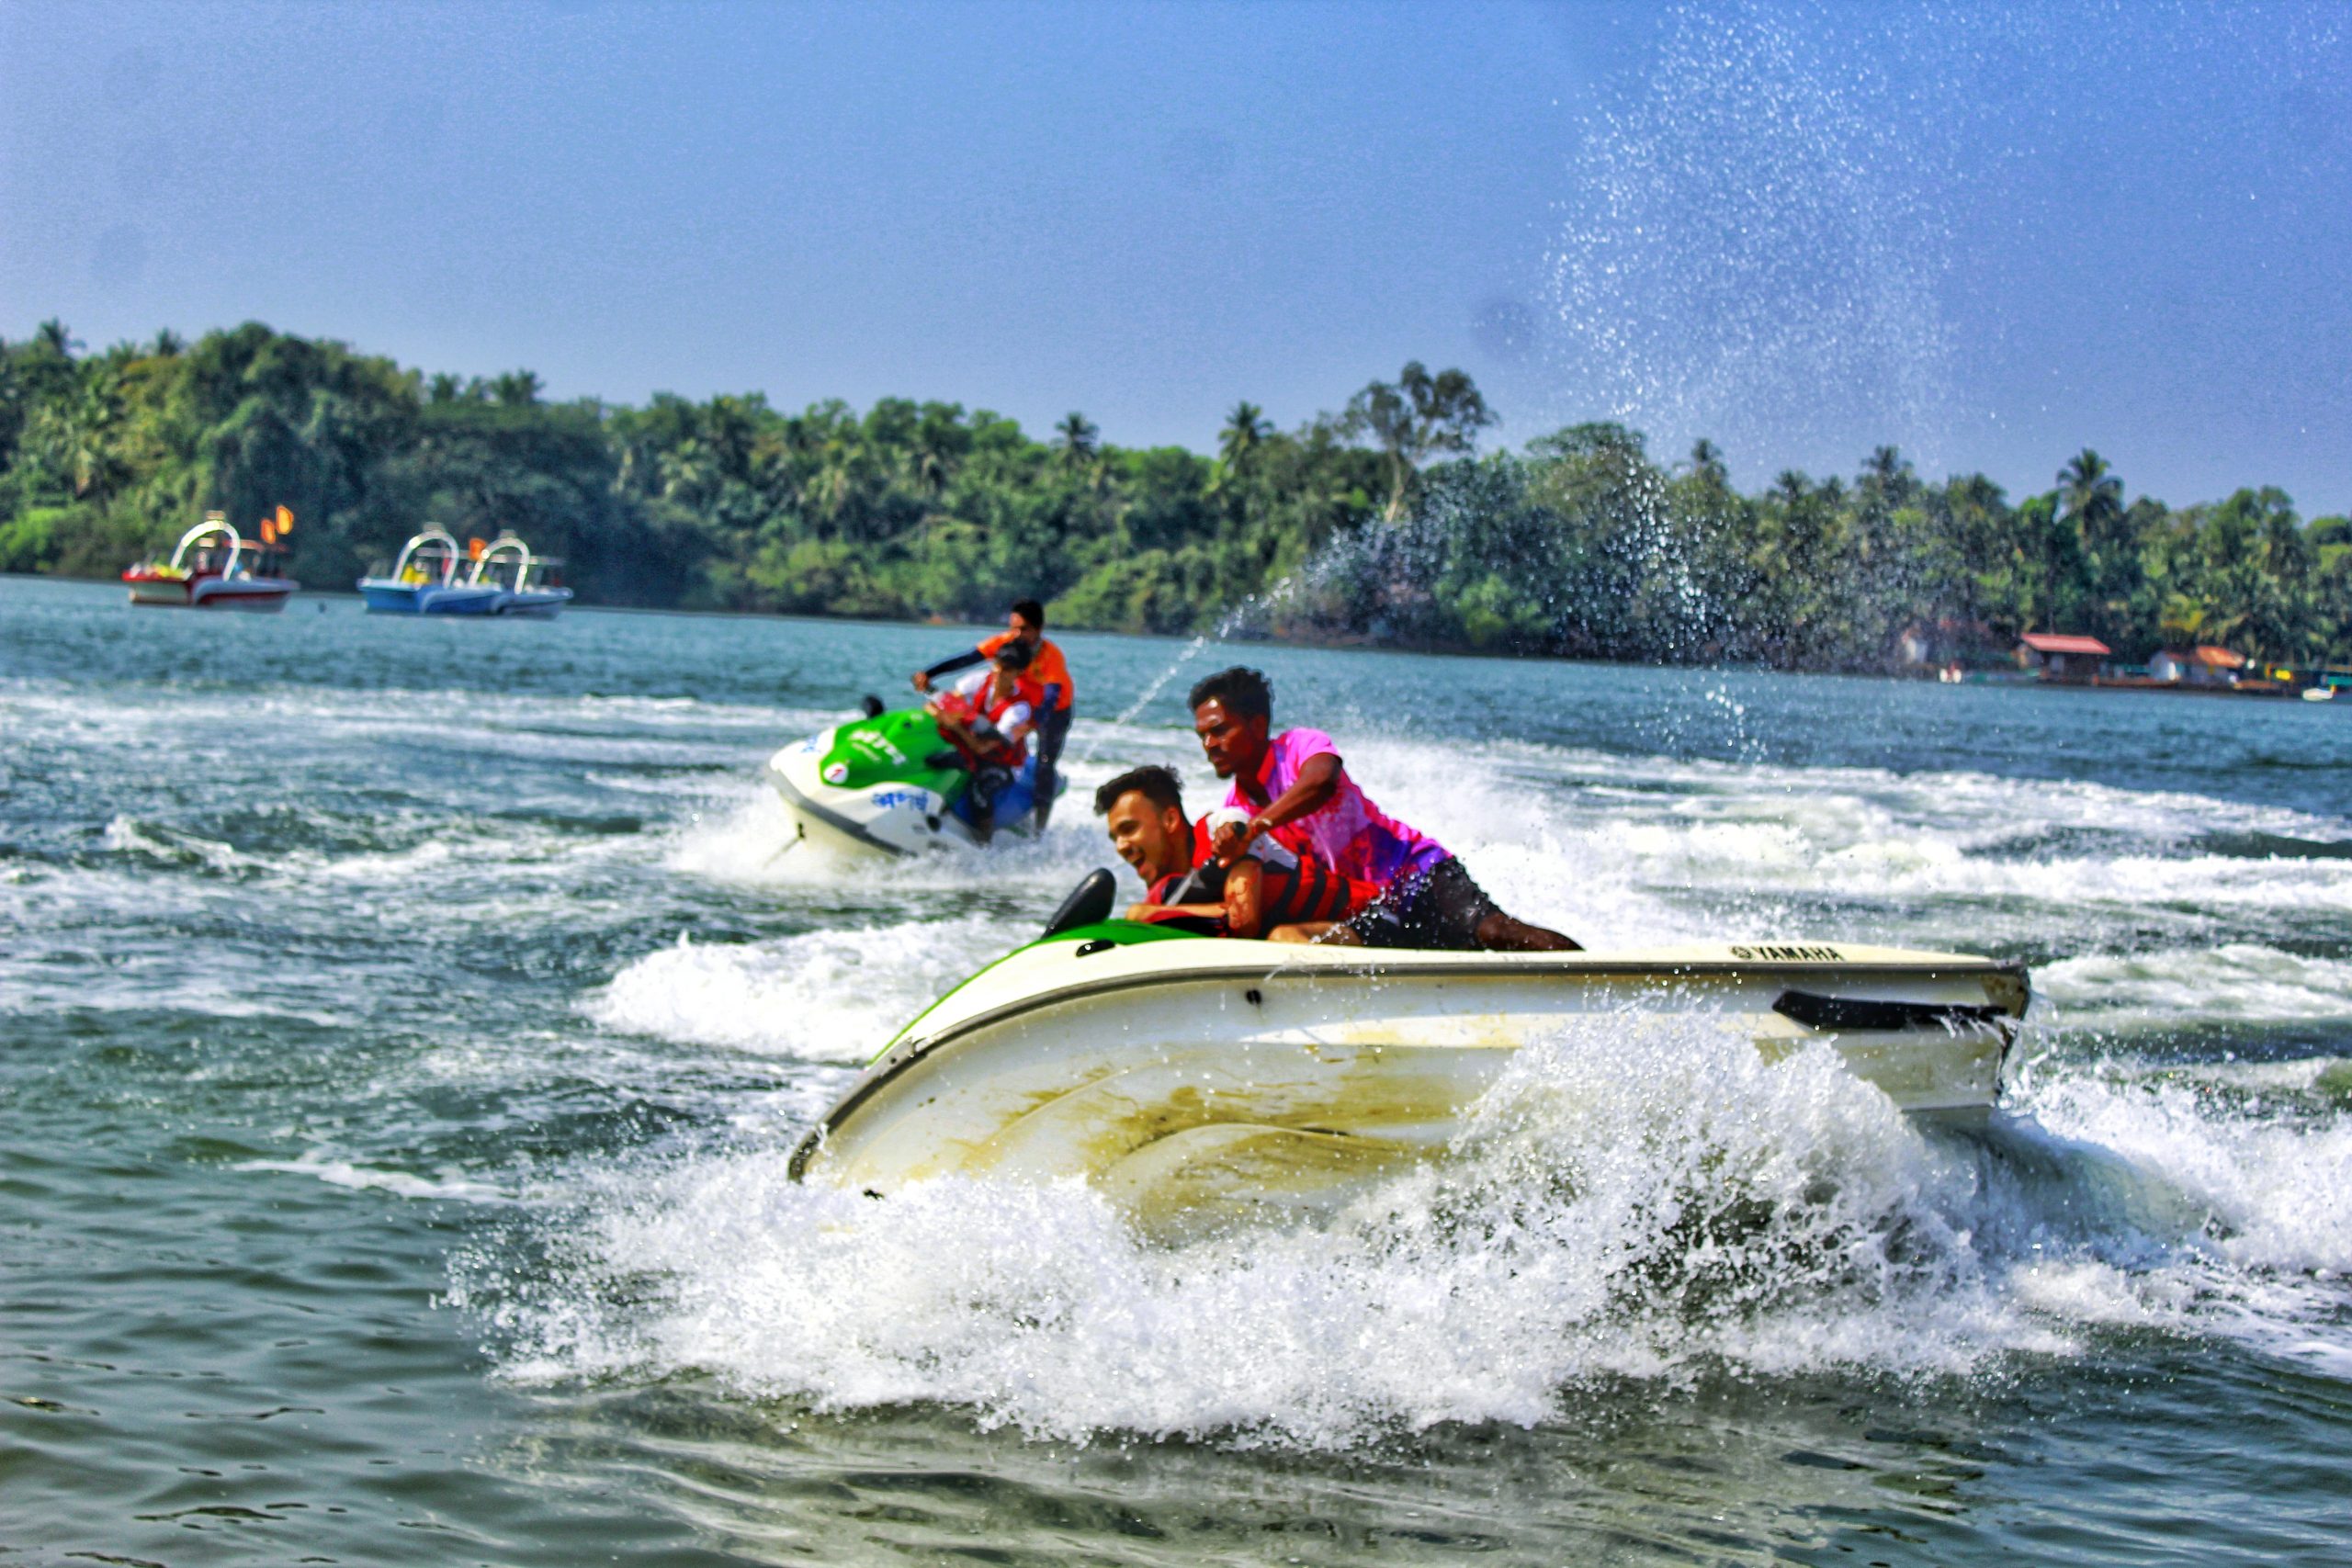 Boys on speed boat